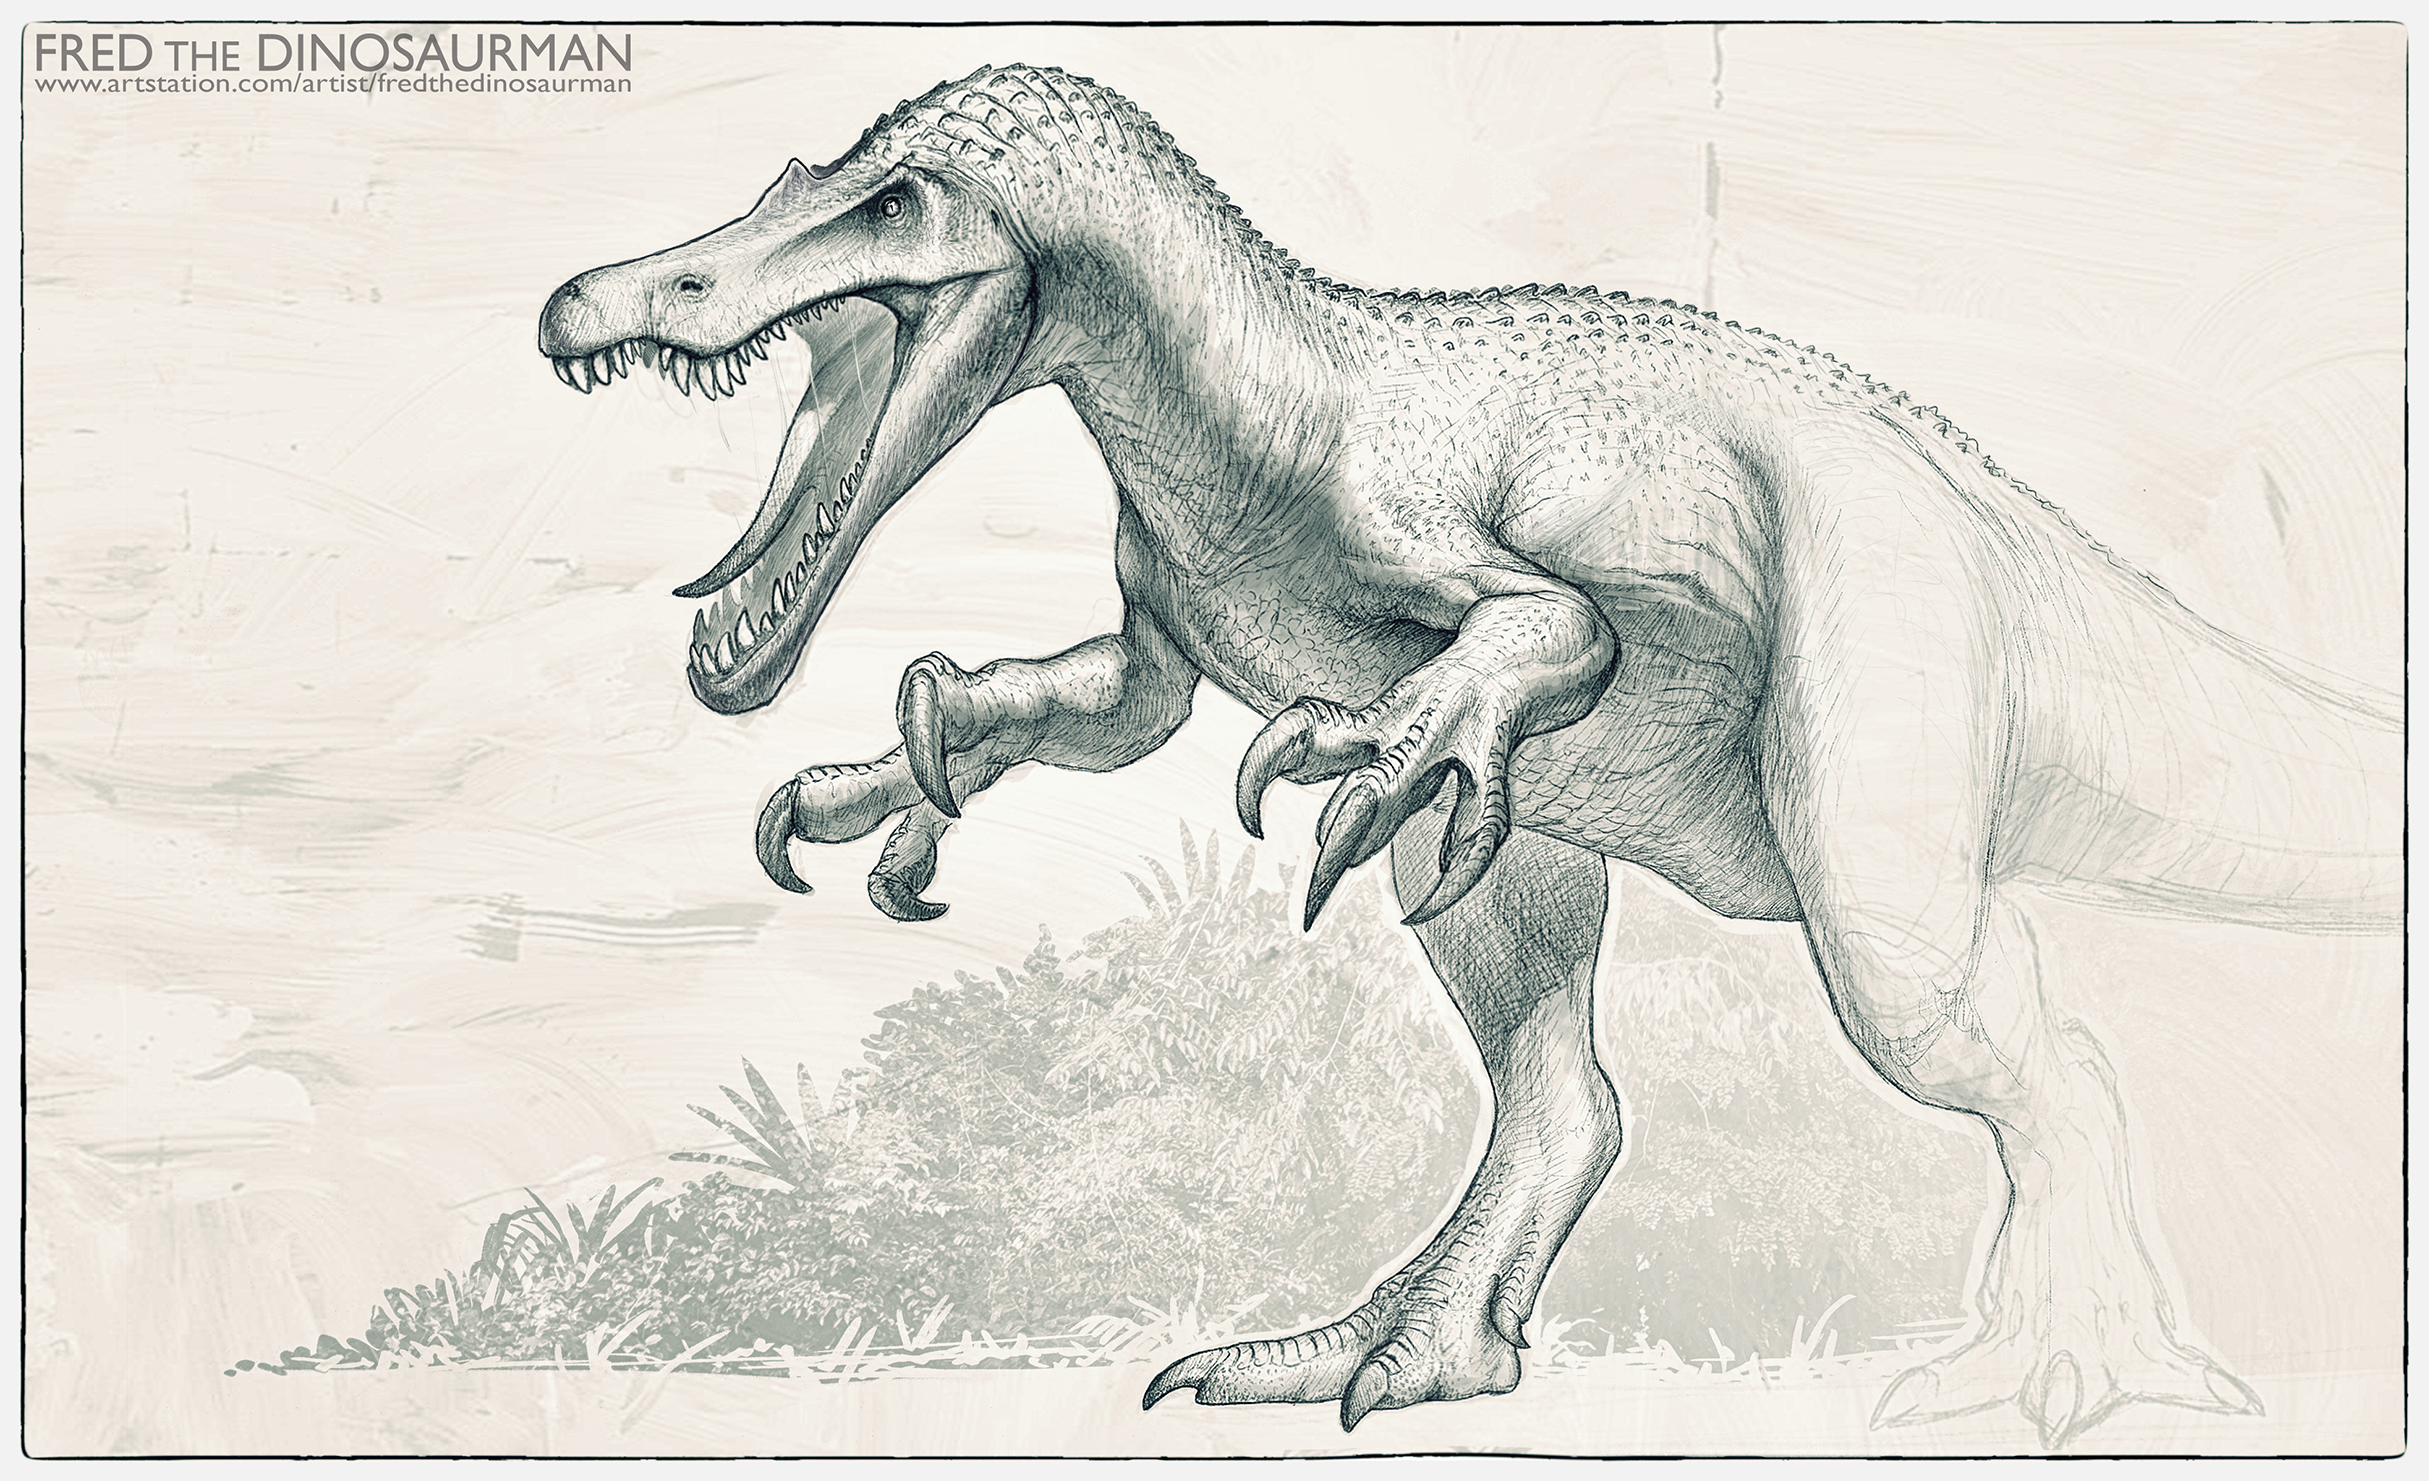 Jurassic World 2 Baryonyx Redesign by FredtheDinosaurman on DeviantArt